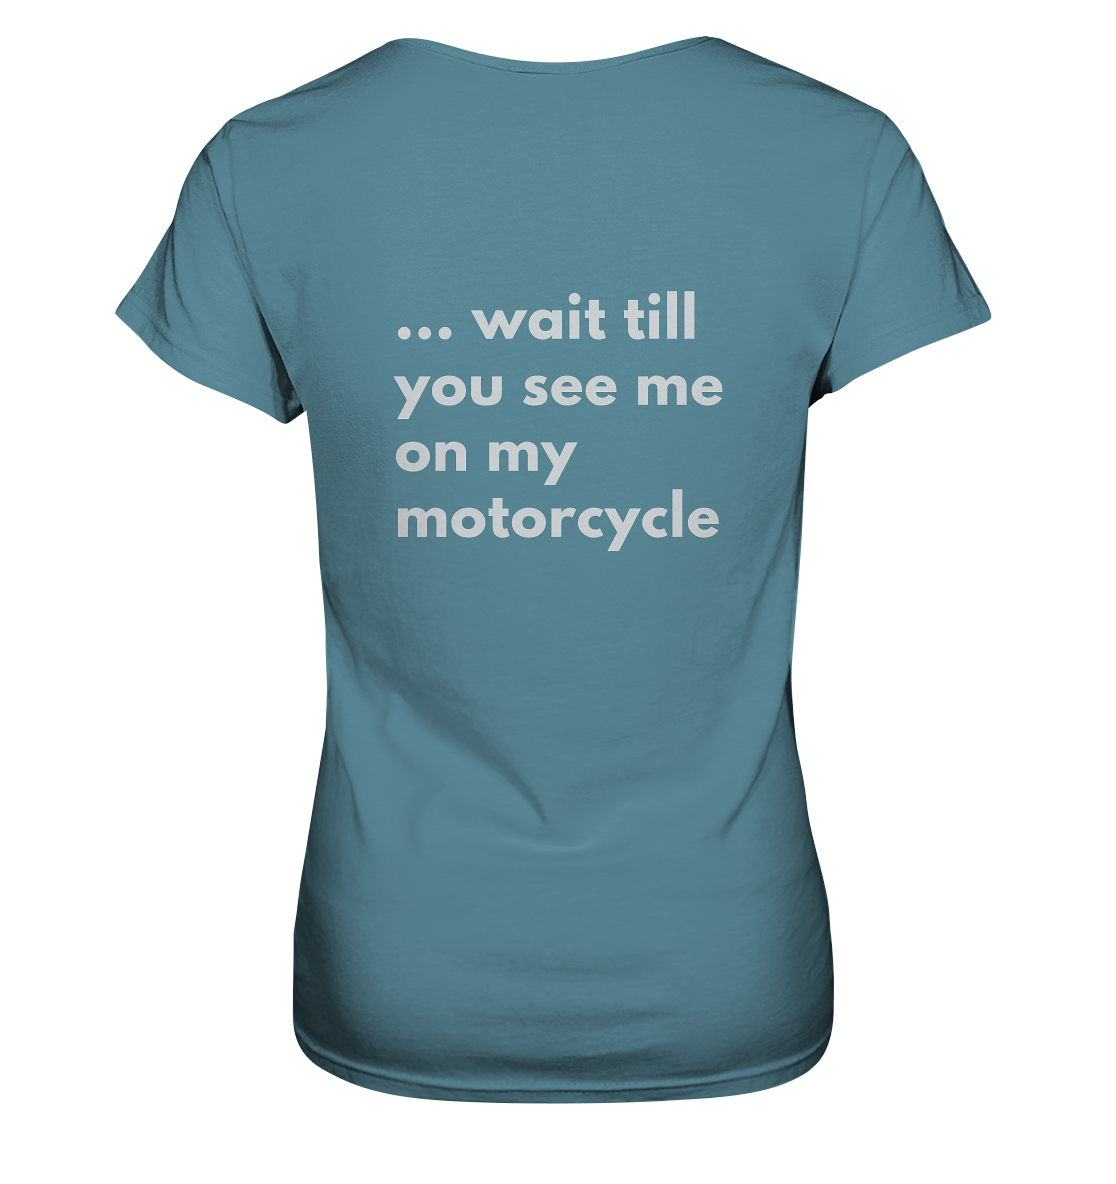 Damen-Motorrad-T-Shirt / Ladies Motorcycle Shirt, white funny print front _ mit witzigem weißem Aufdruck vorn: "If you think I'm sexy now ...", hinten / back: "... wait till you see me on my motorcycle", Rundhals, hellblau/ light blue